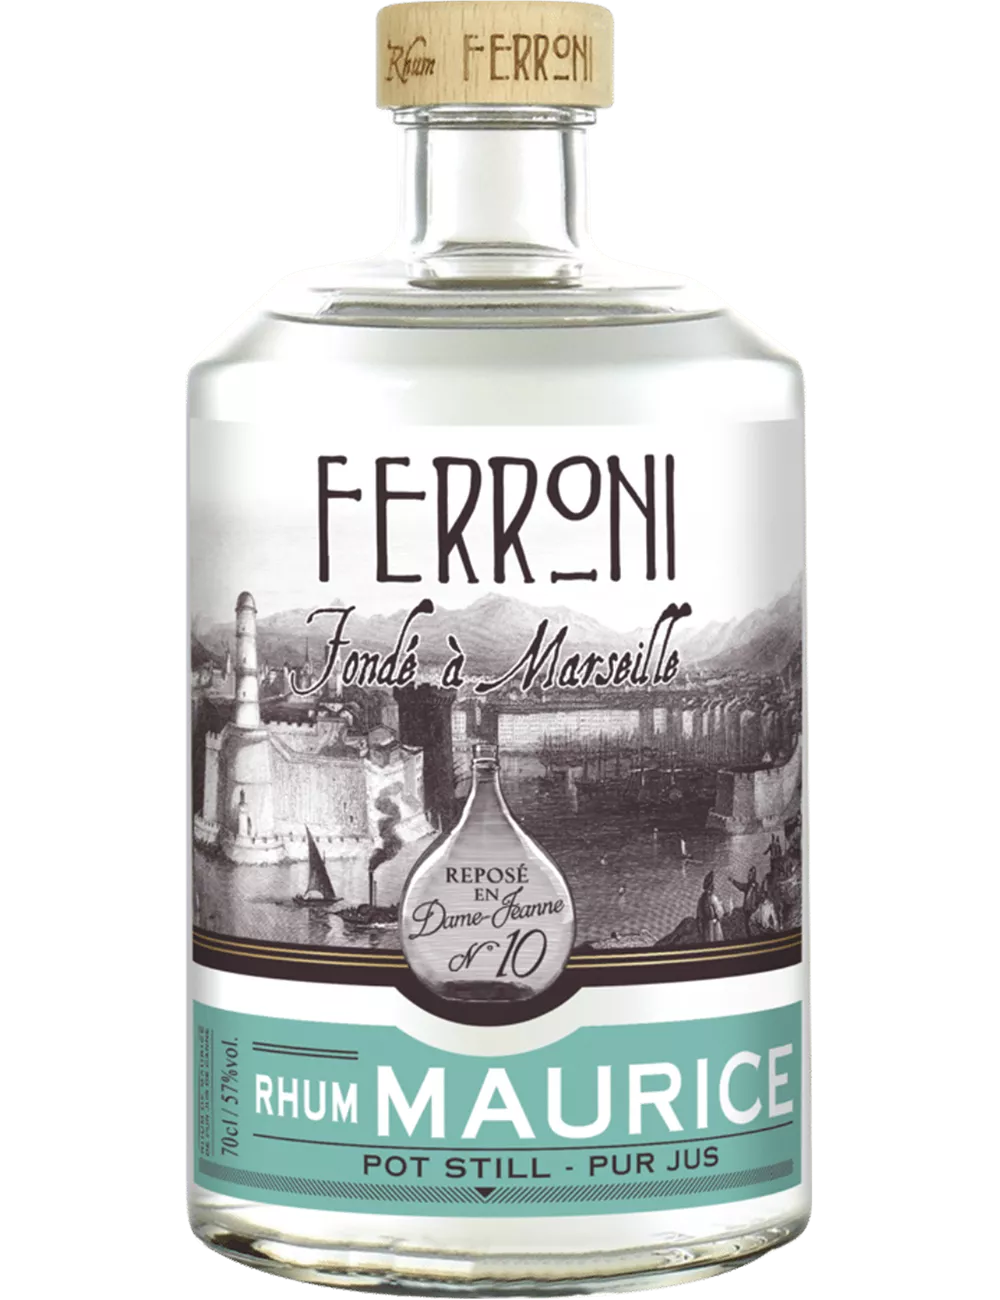 Ferroni - Dame Jeanne - N°10 Maurice - Rhum 100% pur jus de canne blanc